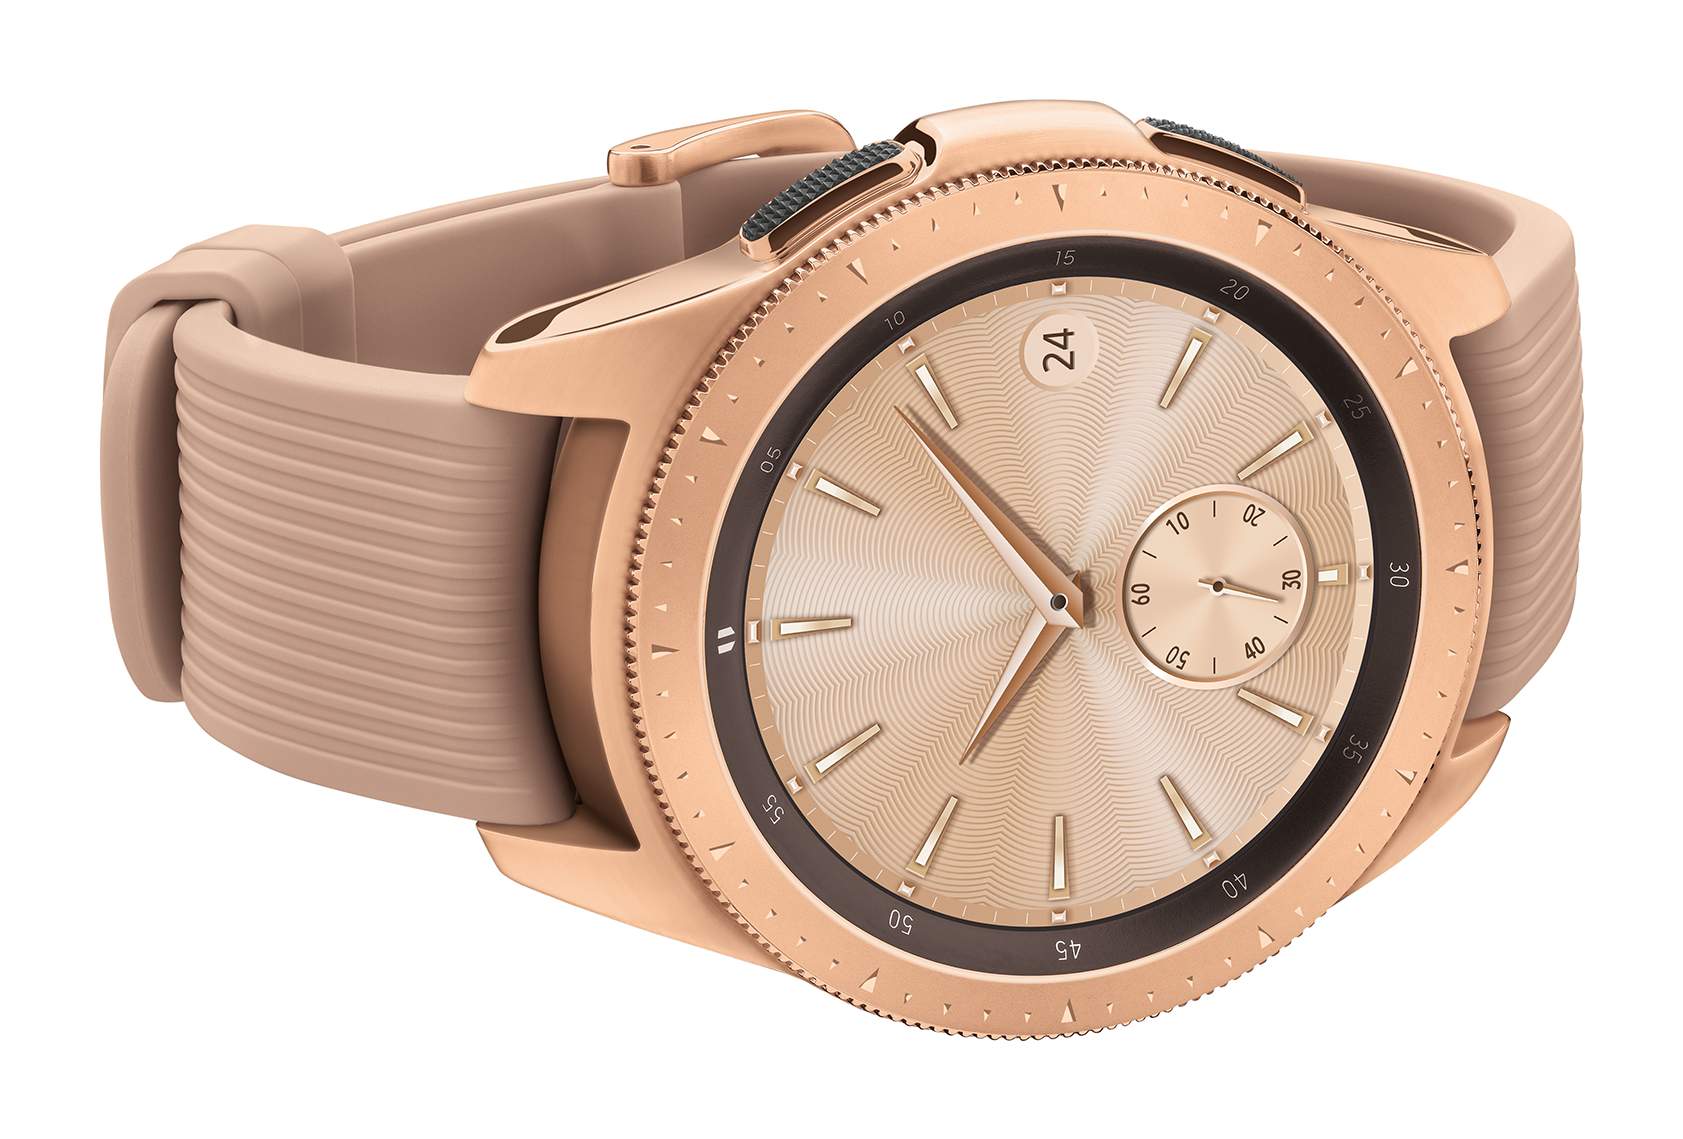 SAMSUNG Galaxy Watch - Bluetooth Smart Watch (42 mm) - Rose Gold - SM-R810NZDAXAR - image 5 of 15